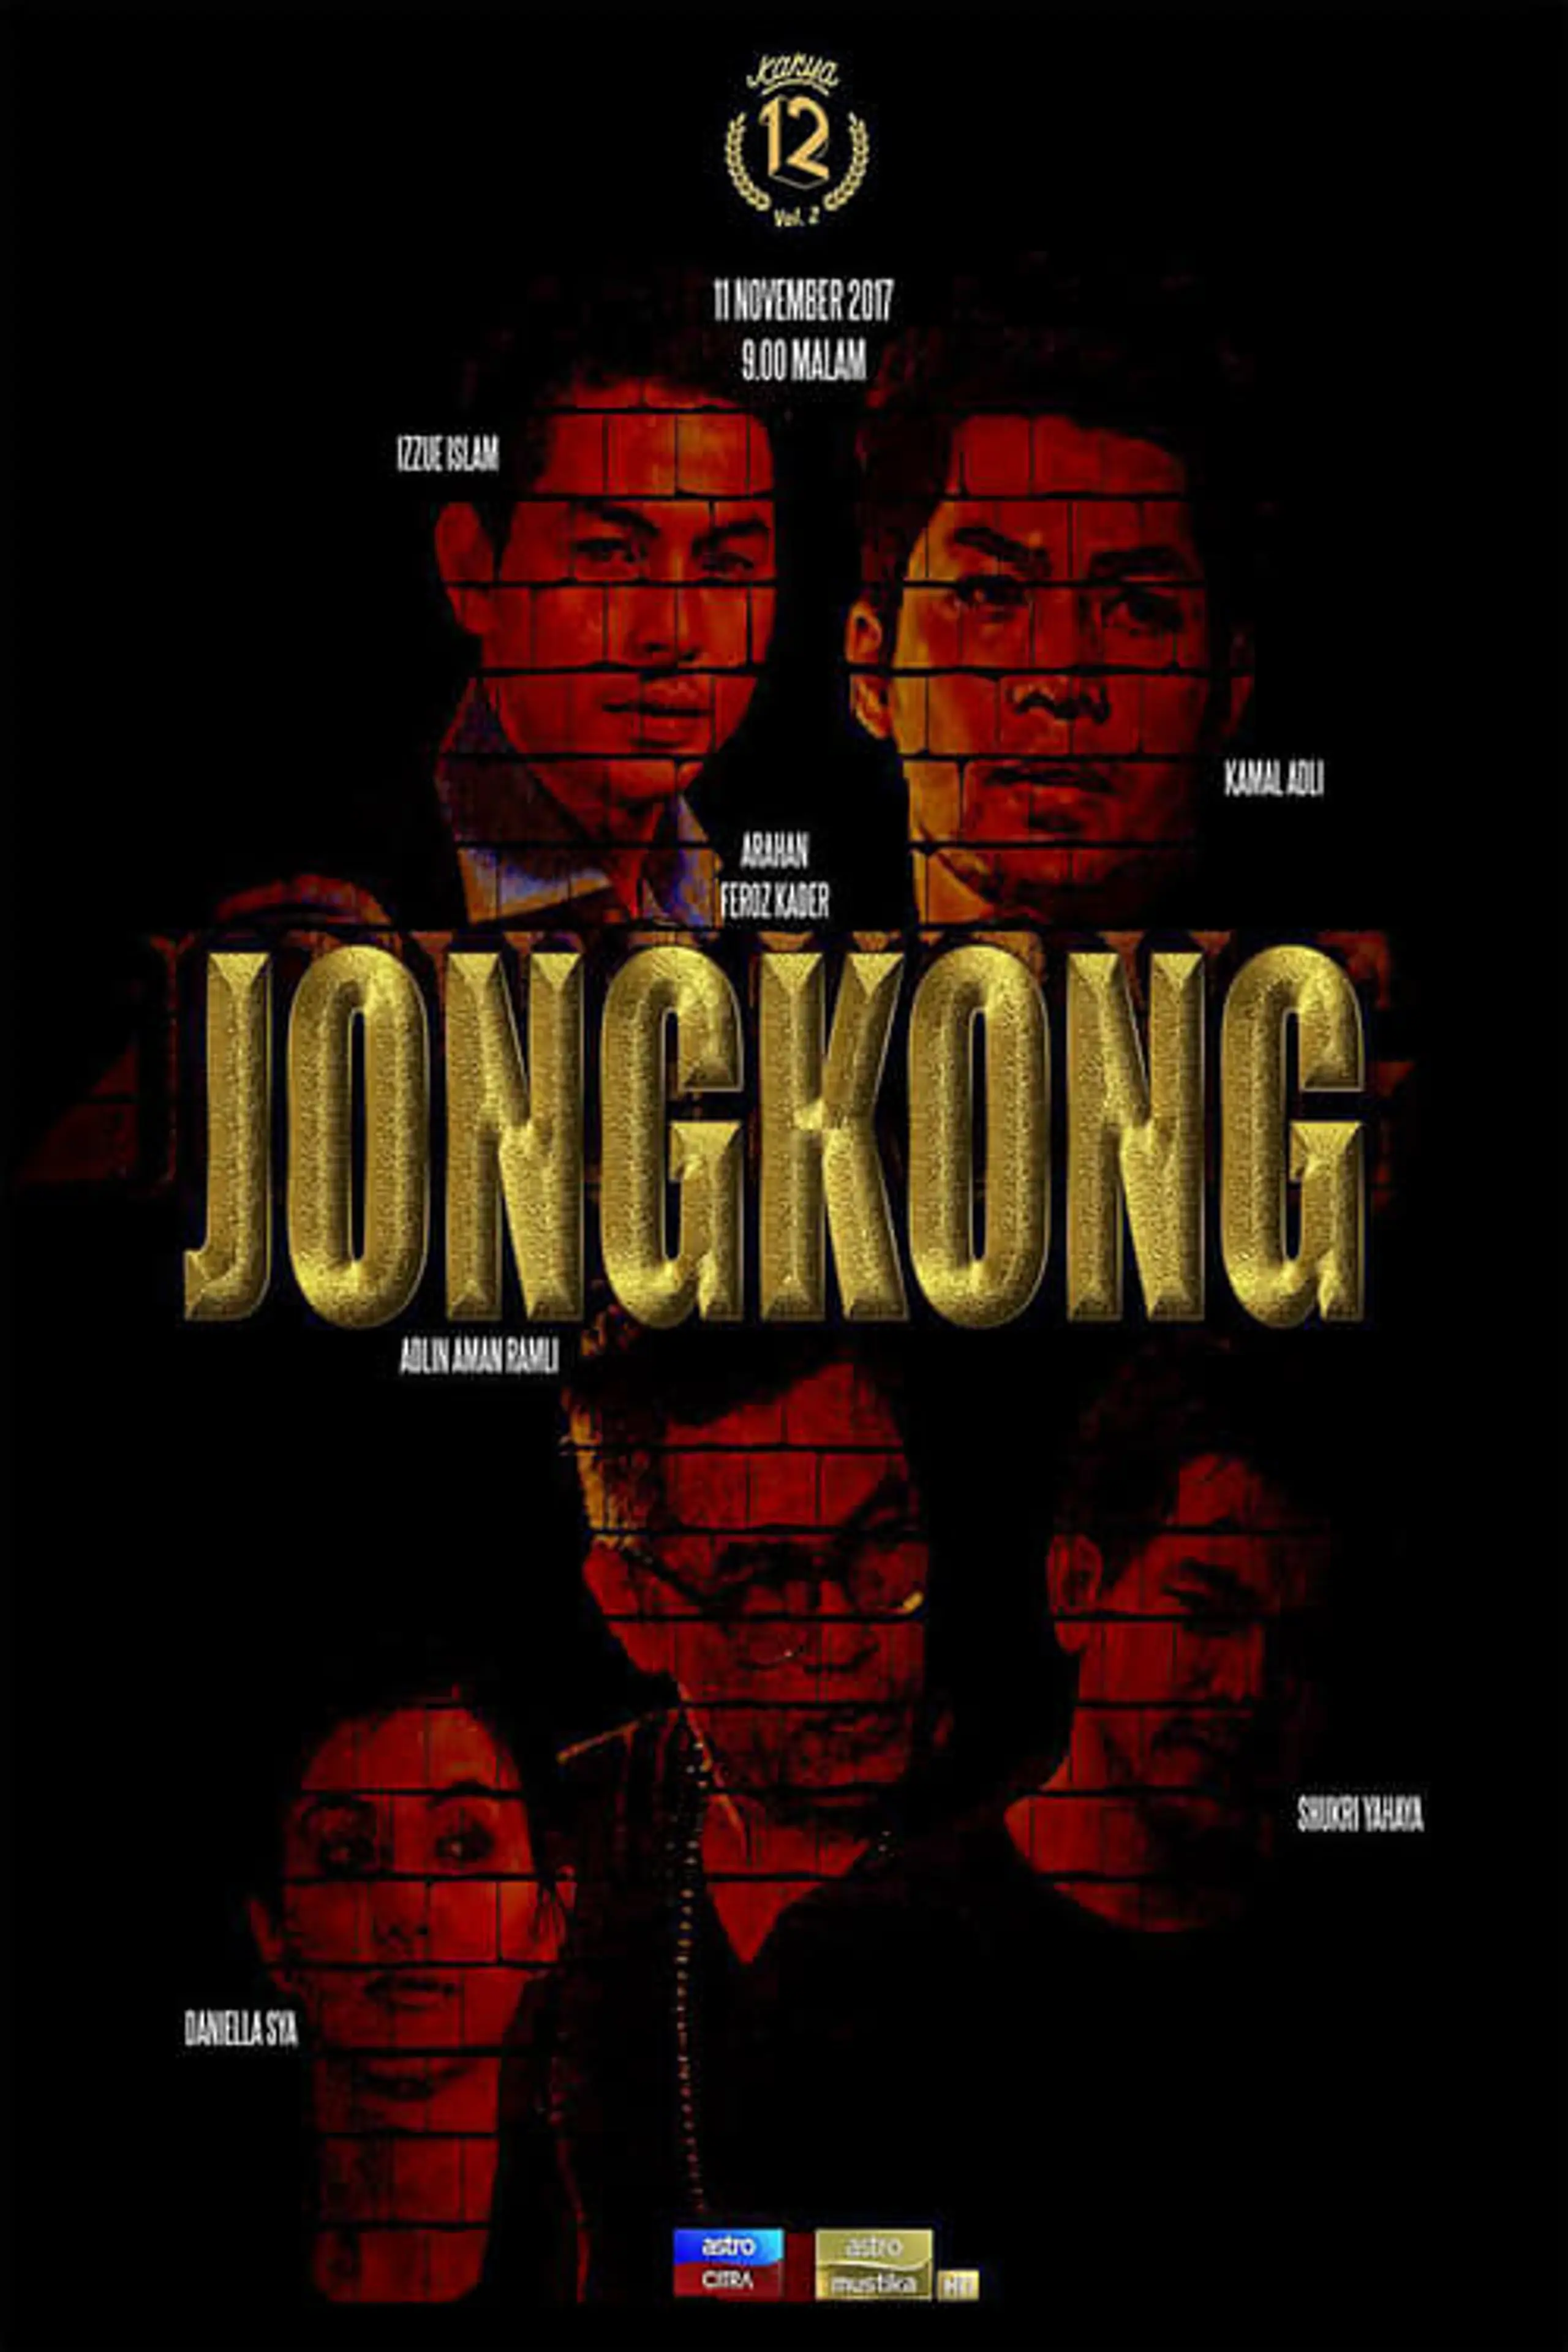 Jongkong